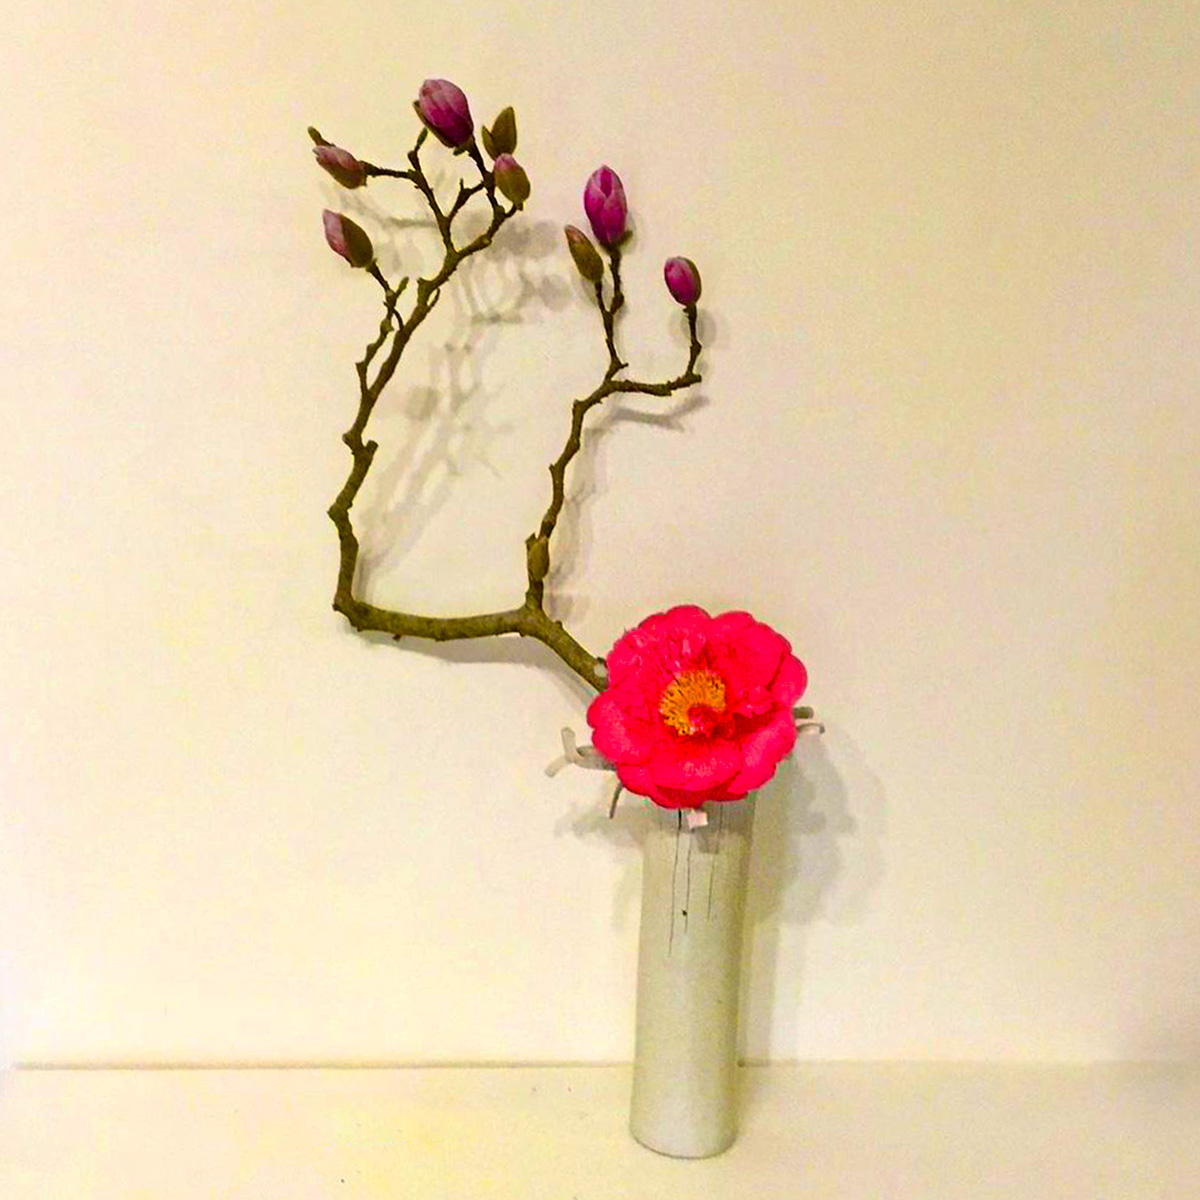 Toula Karanikolopoulos Shows How Ikebana Is the Art of Flower Arrangement 04